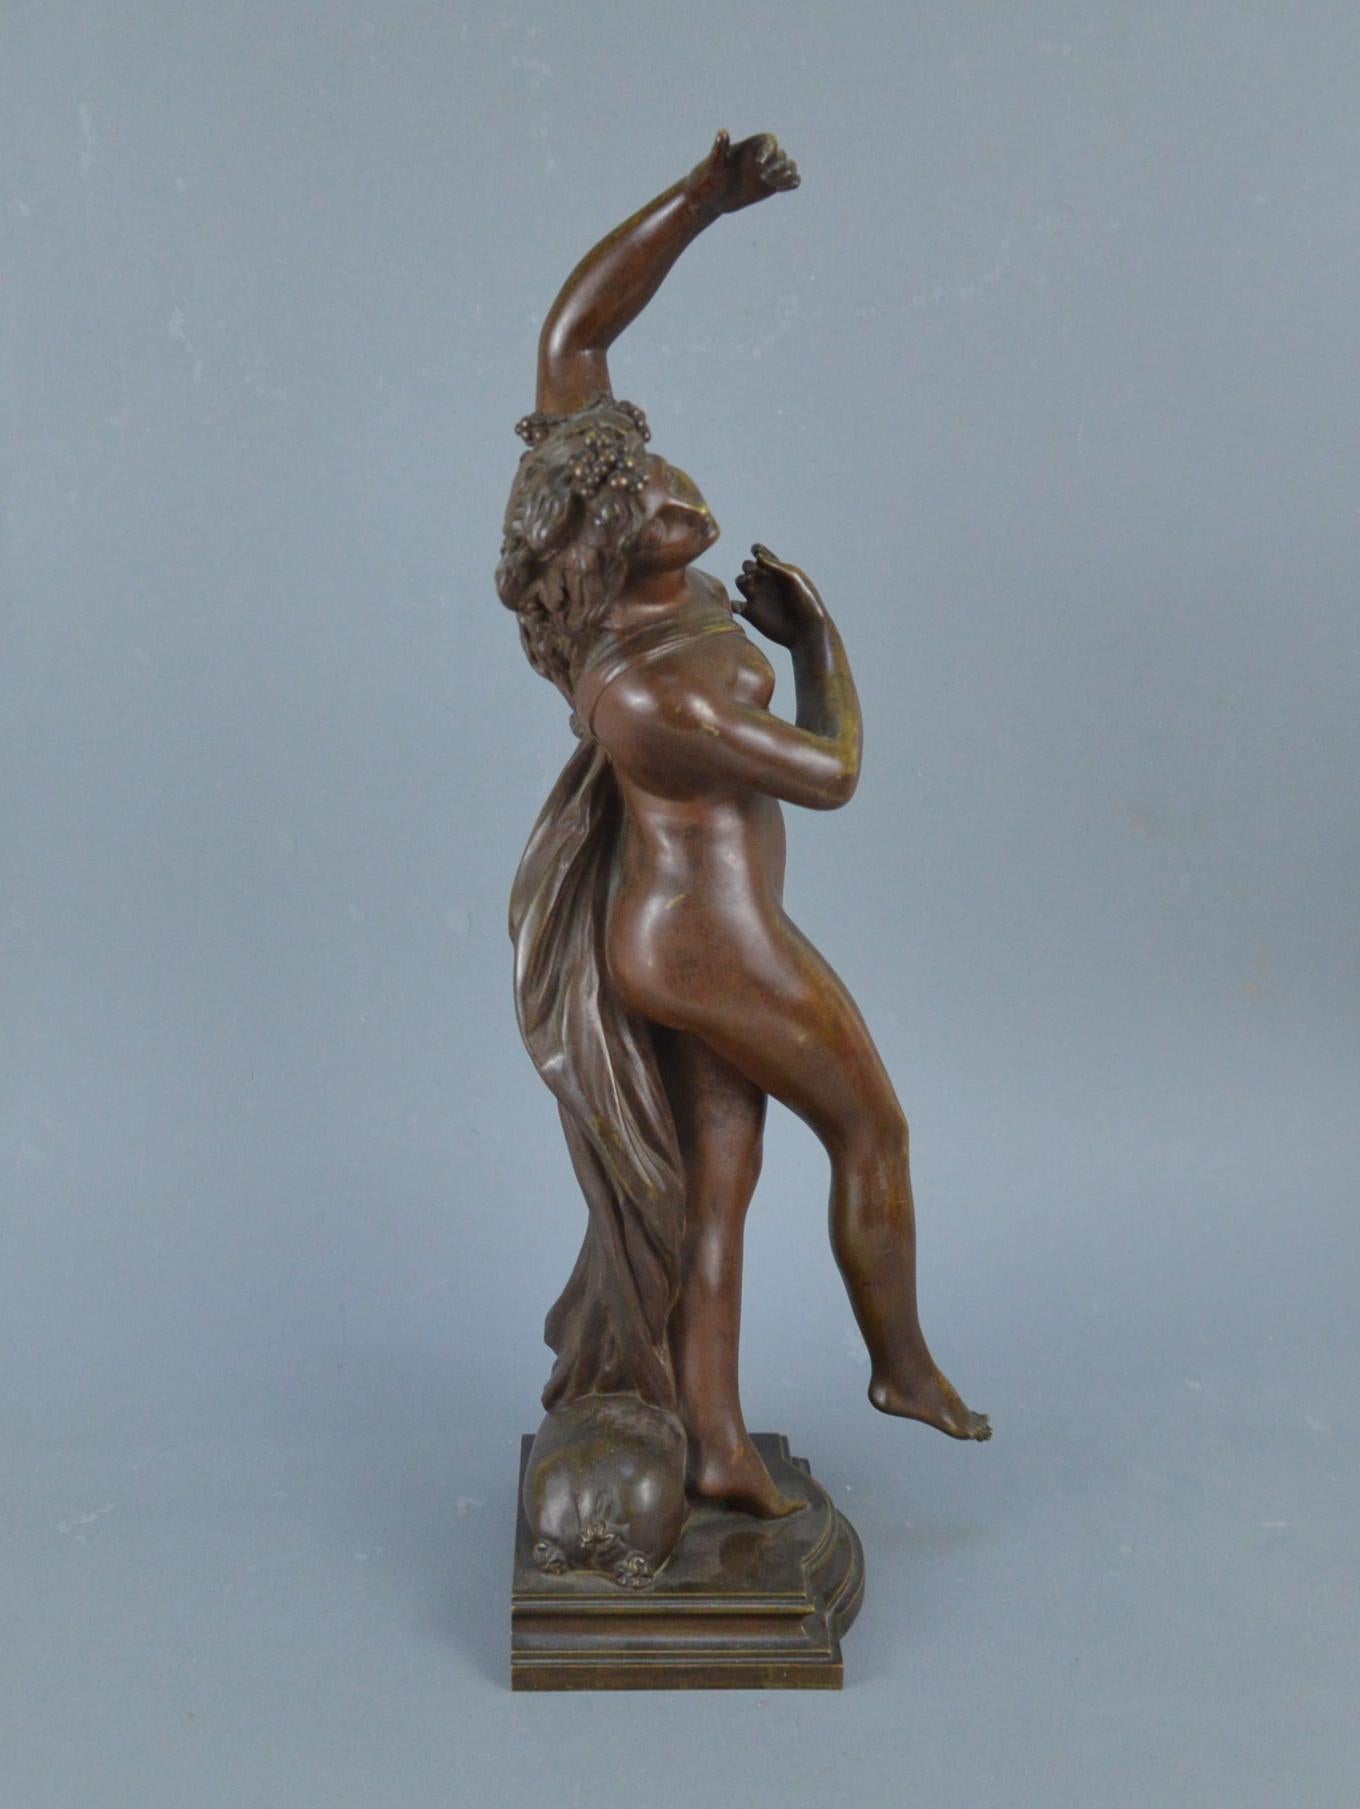 Patinated Bronze Sculpture Representing a Bacchante 19th Century (Französisch)